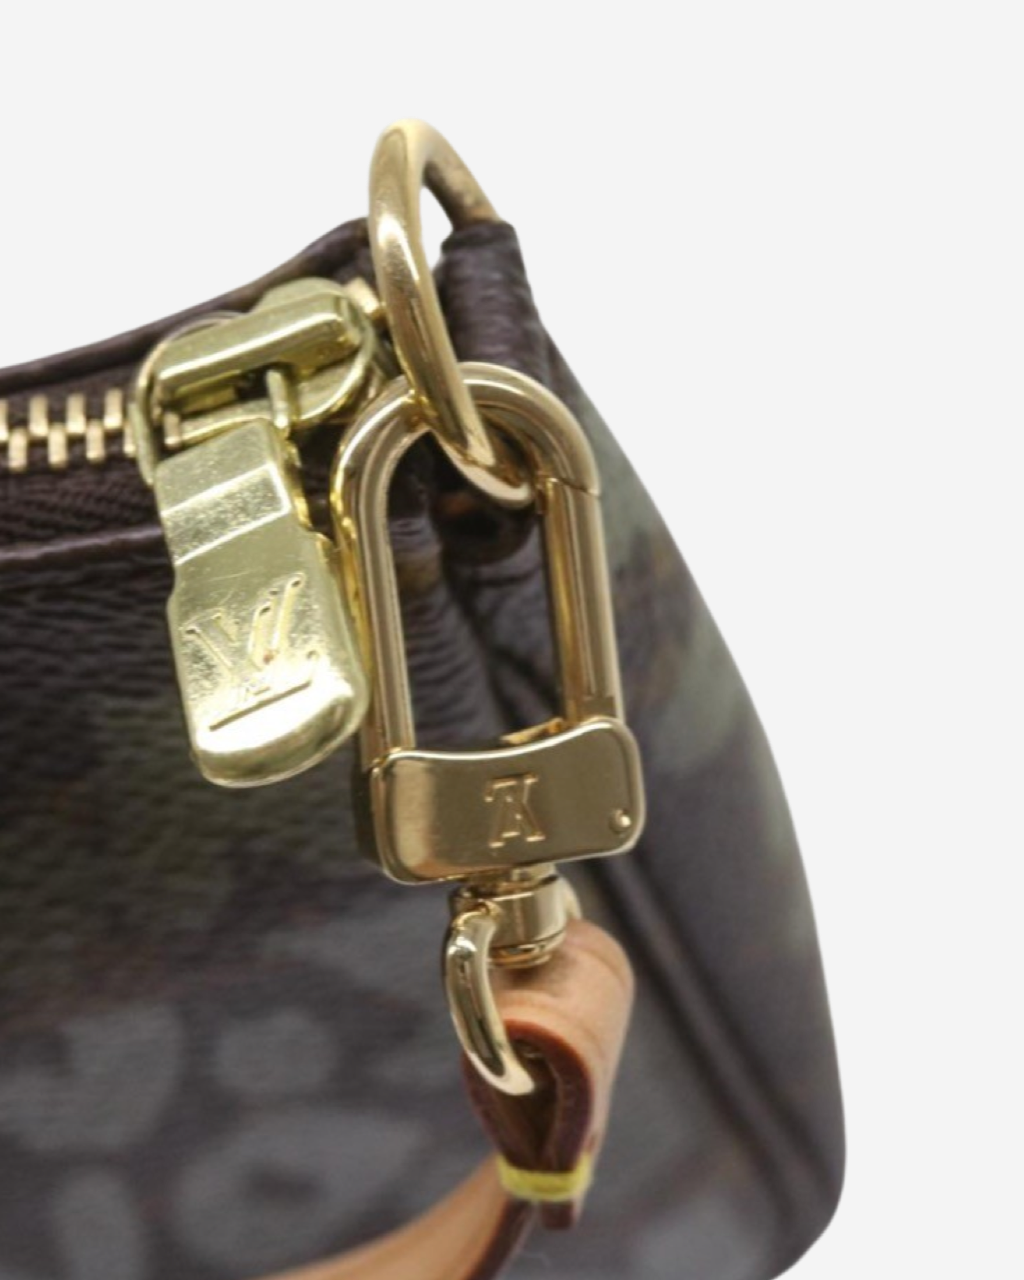 Louis Vuitton x Stephen Sprouse Pochette Bag